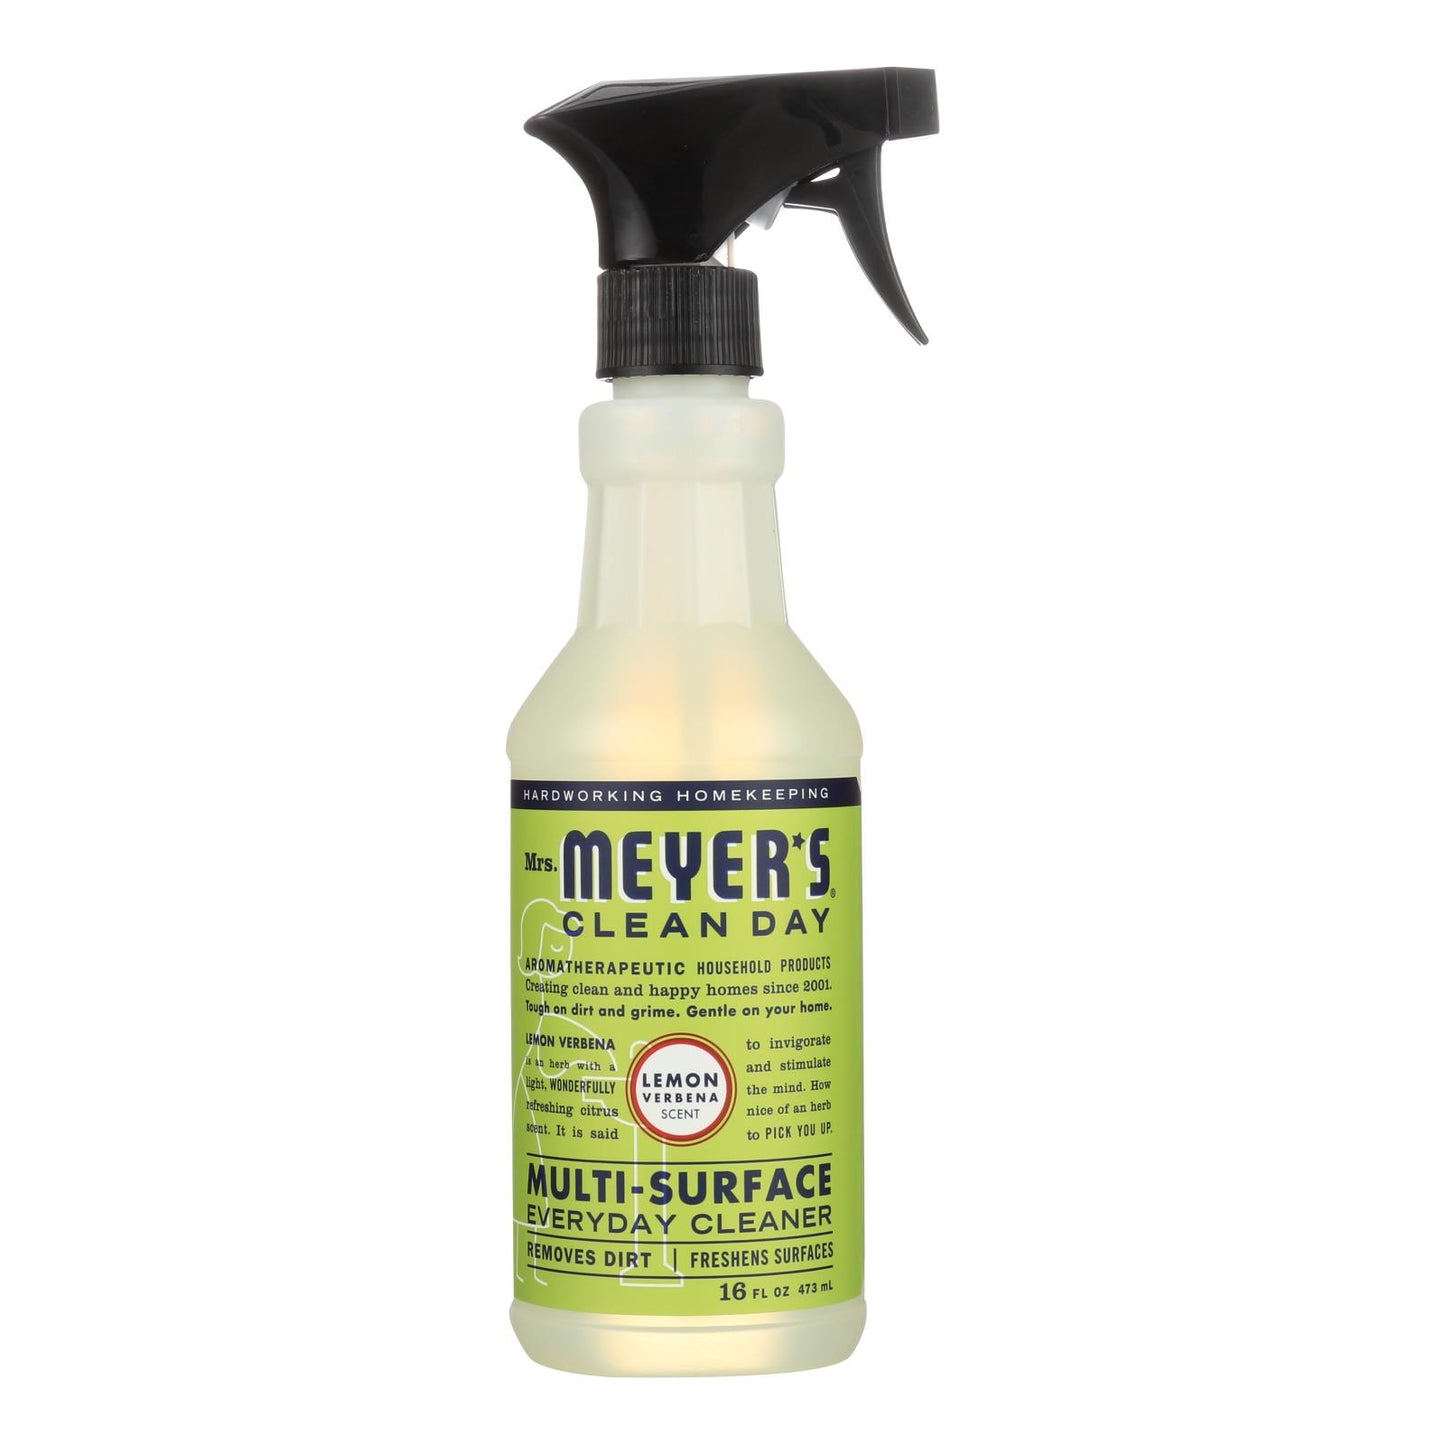 Mrs. Meyer's Clean Day - Multi-surface Everyday Cleaner - Lemon Verbena - 16 Fl Oz - Case Of 6